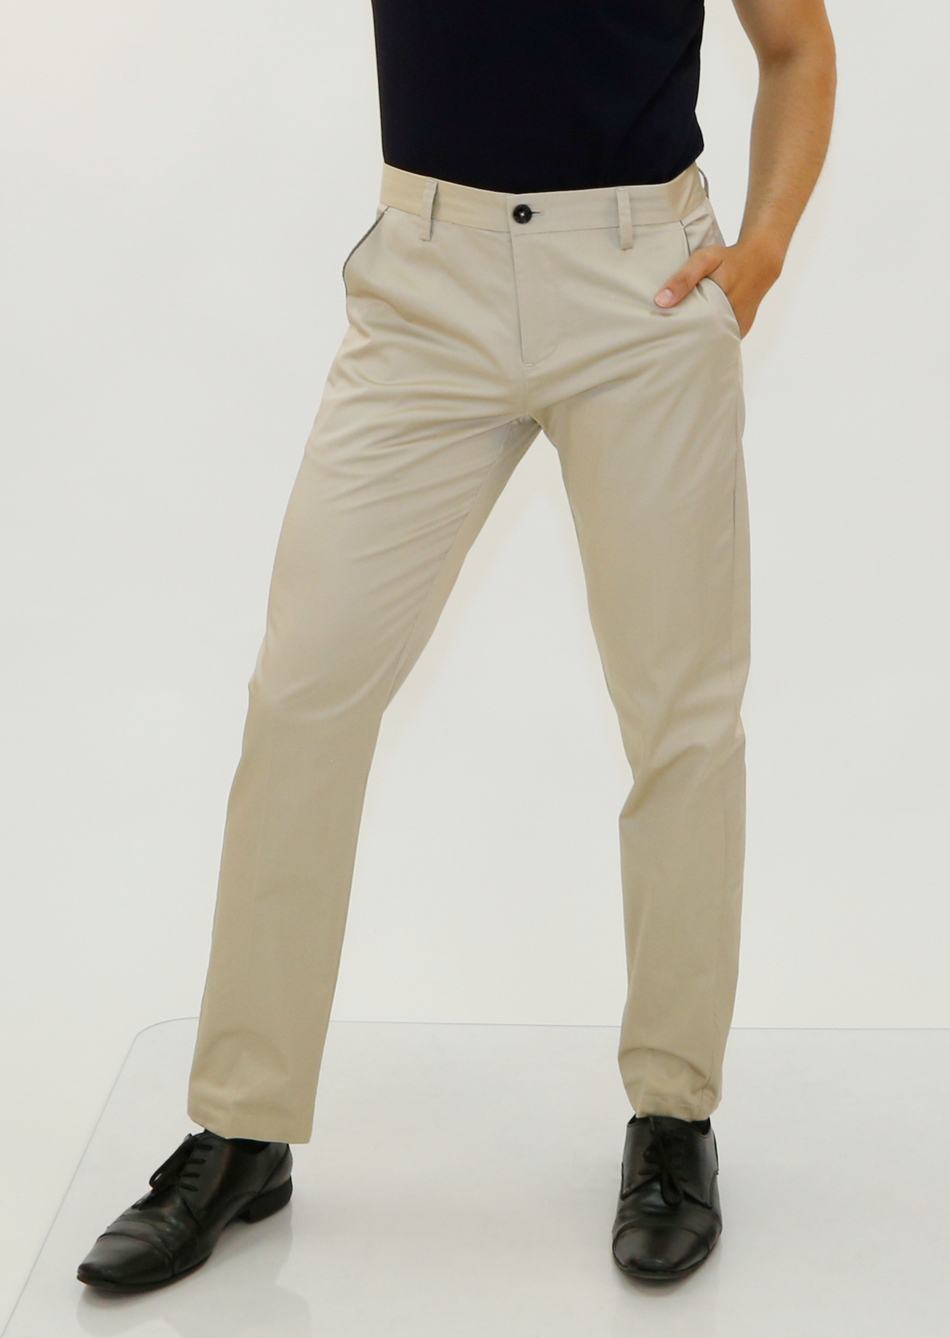 BESPOKE - Khaki Pants for Men - 183122 - www.– BESPOKE MODA